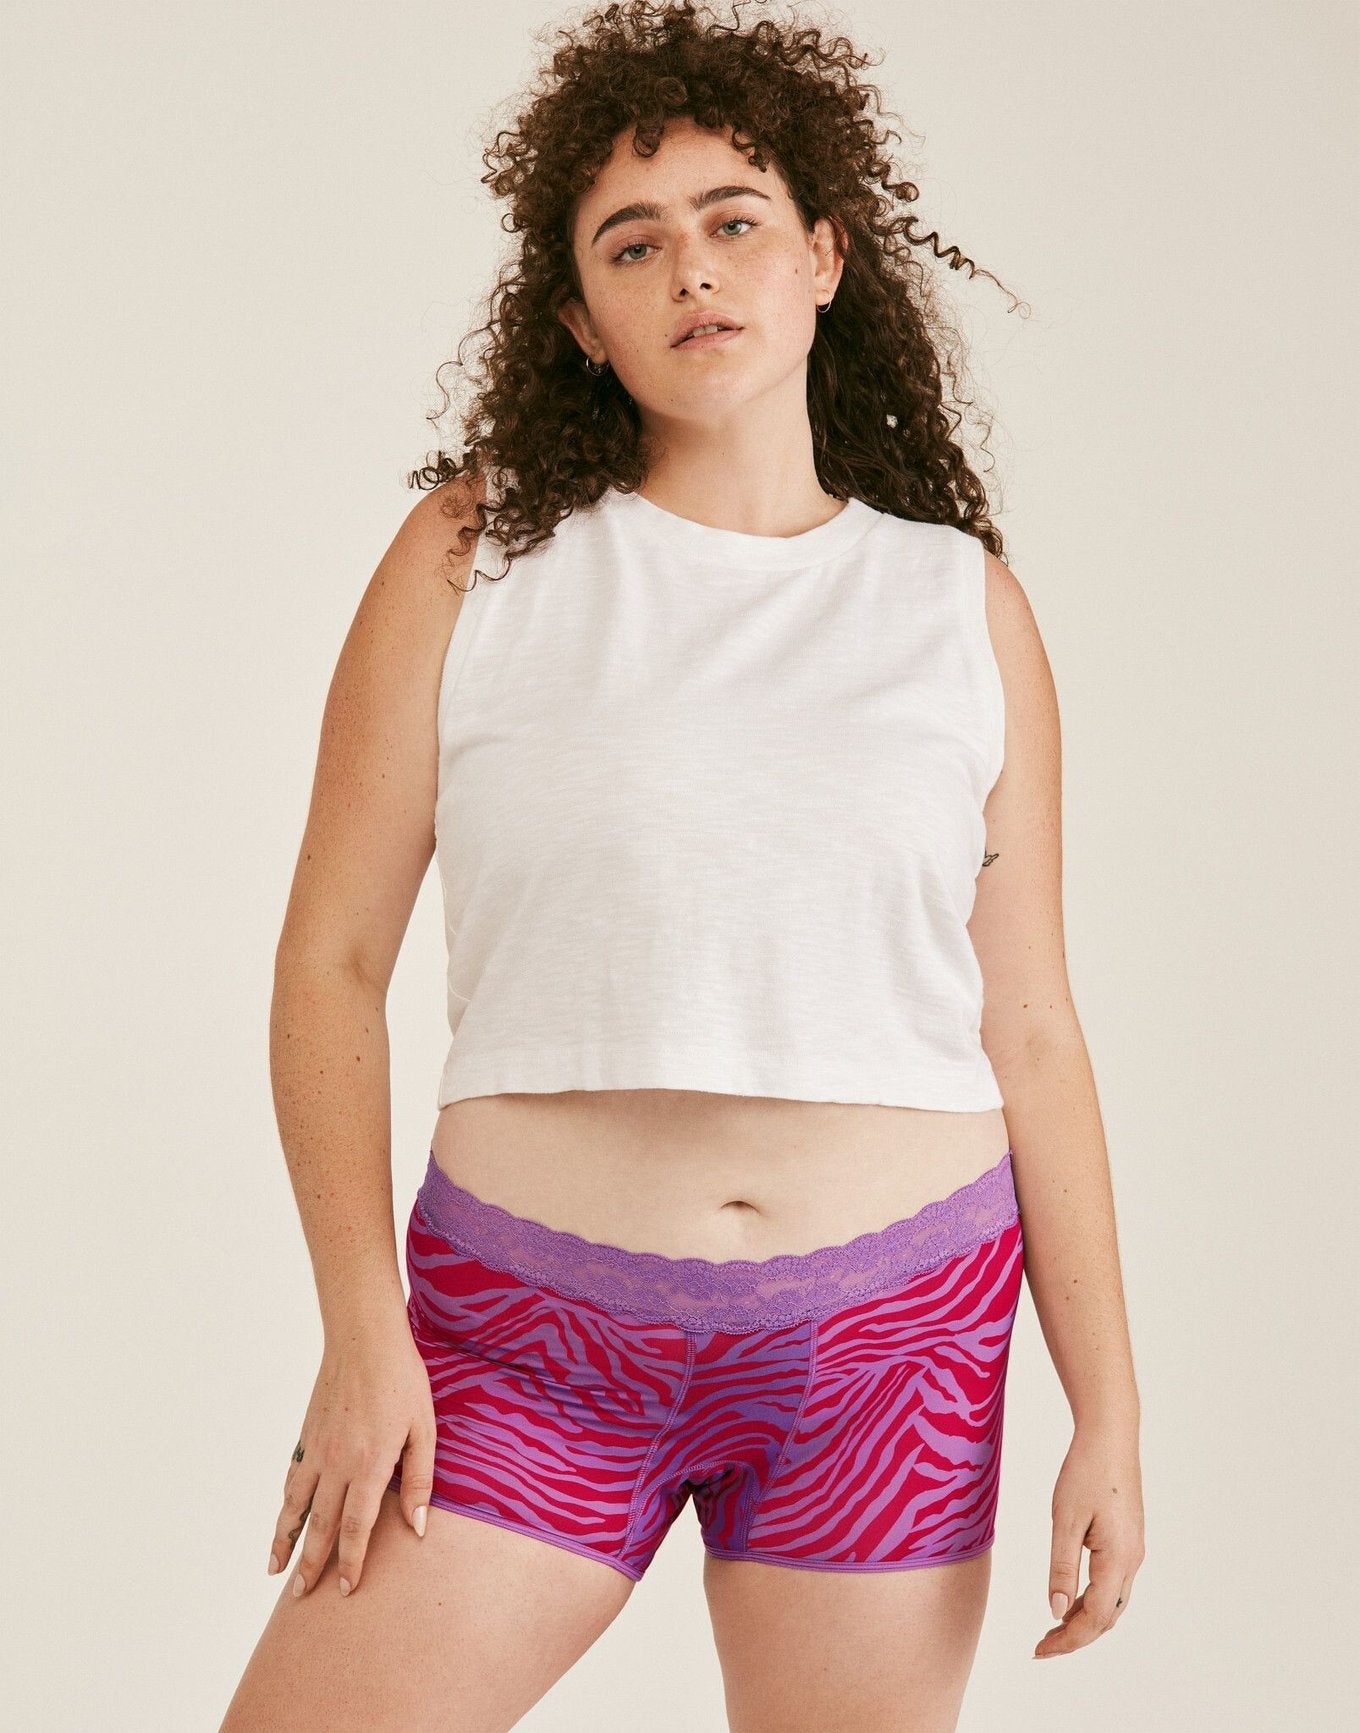 Joyja Emily period-proof panty in color Secret Safari C02 and shape shortie